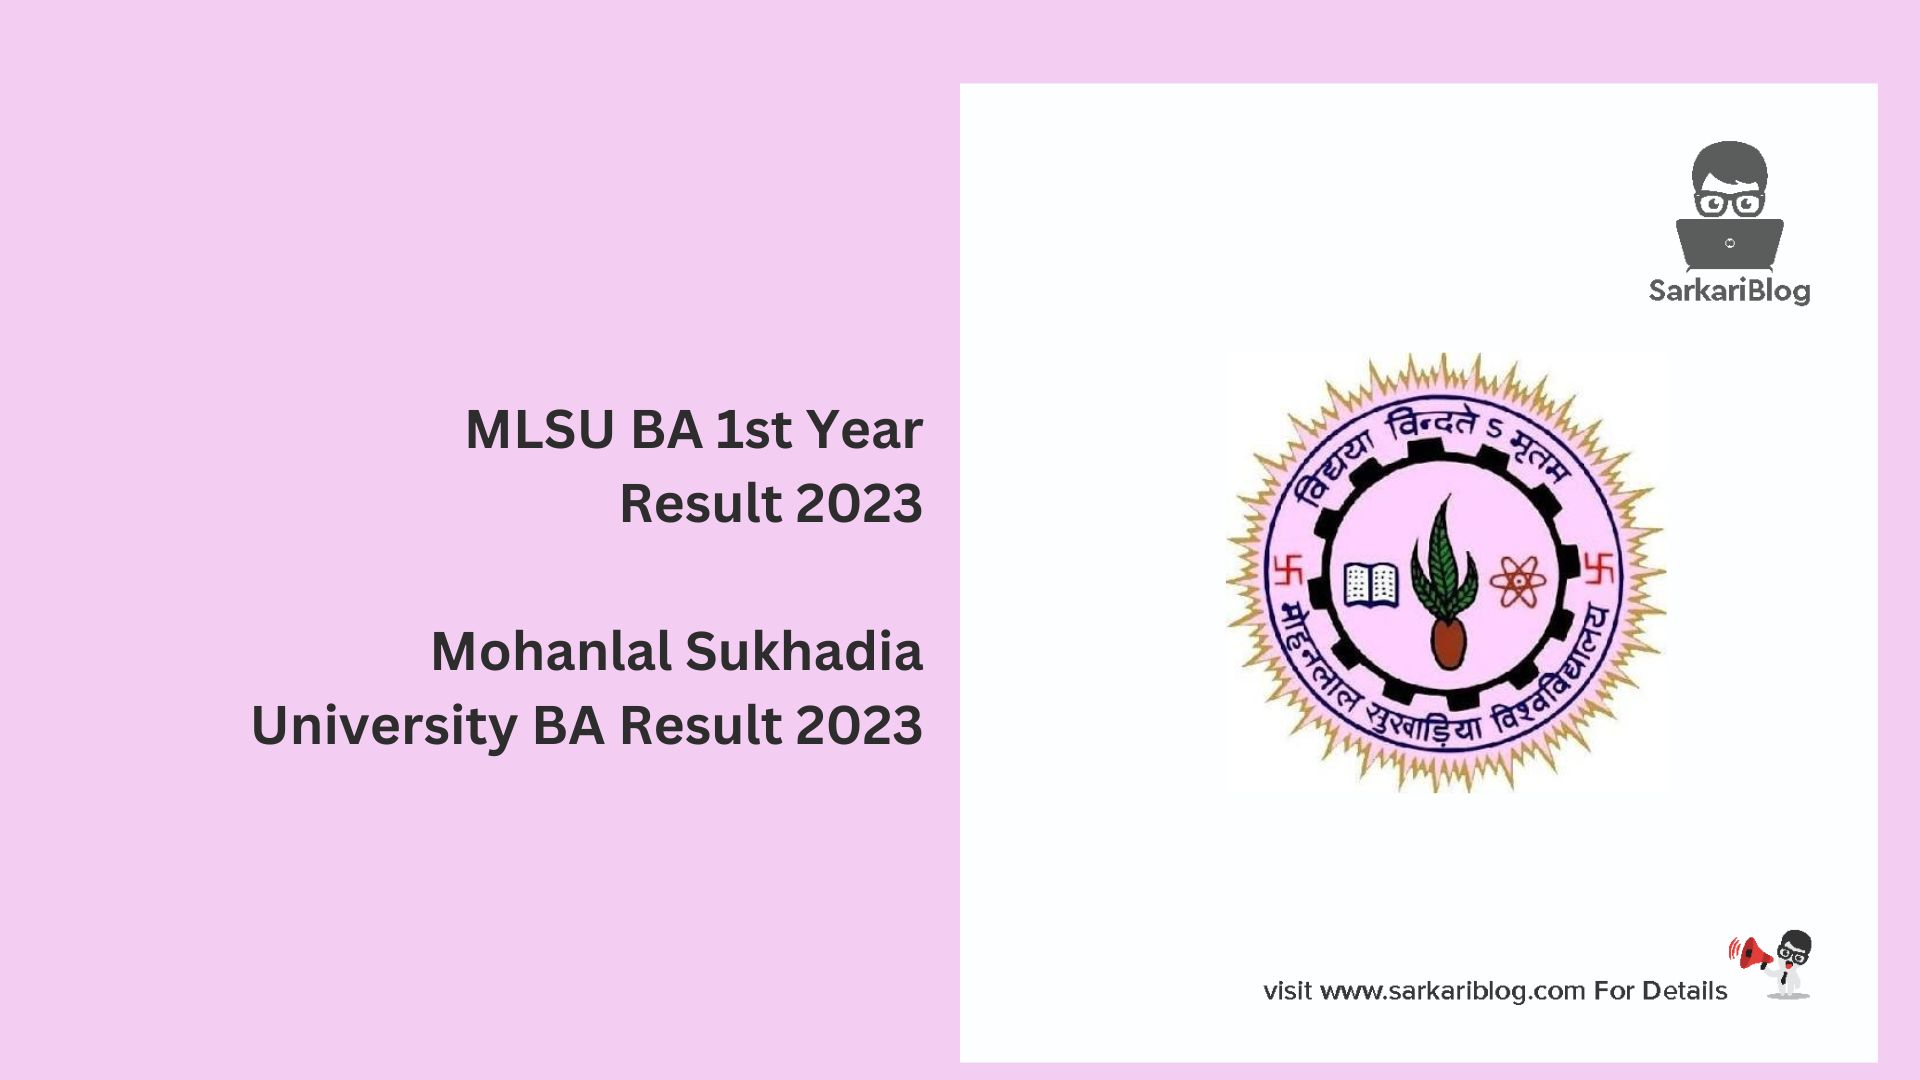 MLSU BA 1st Year Result 2023